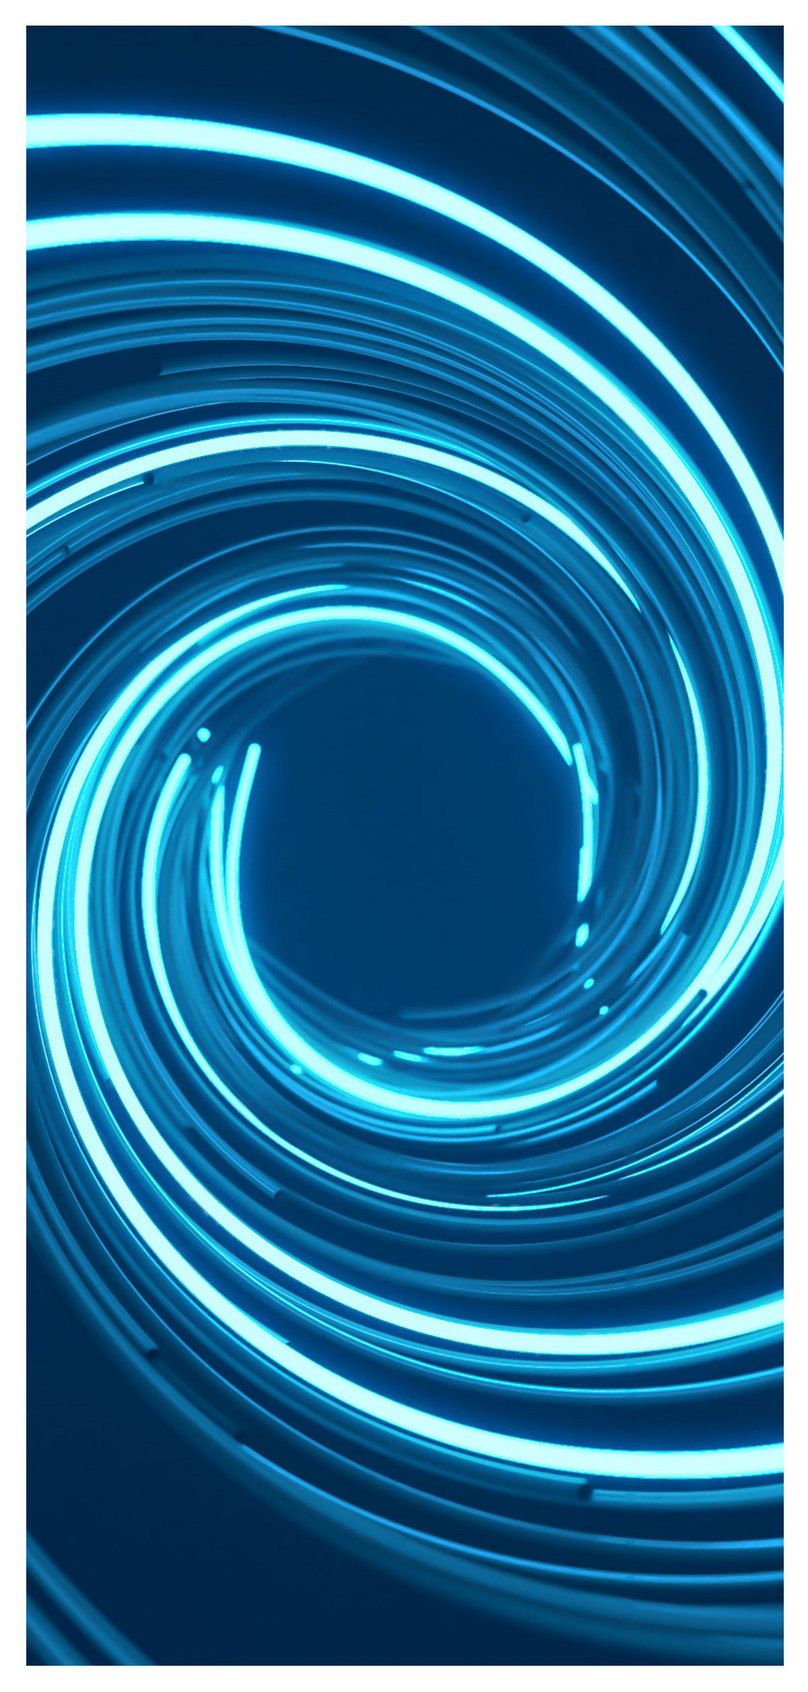 whirlpool lighting background wallpaper background image free